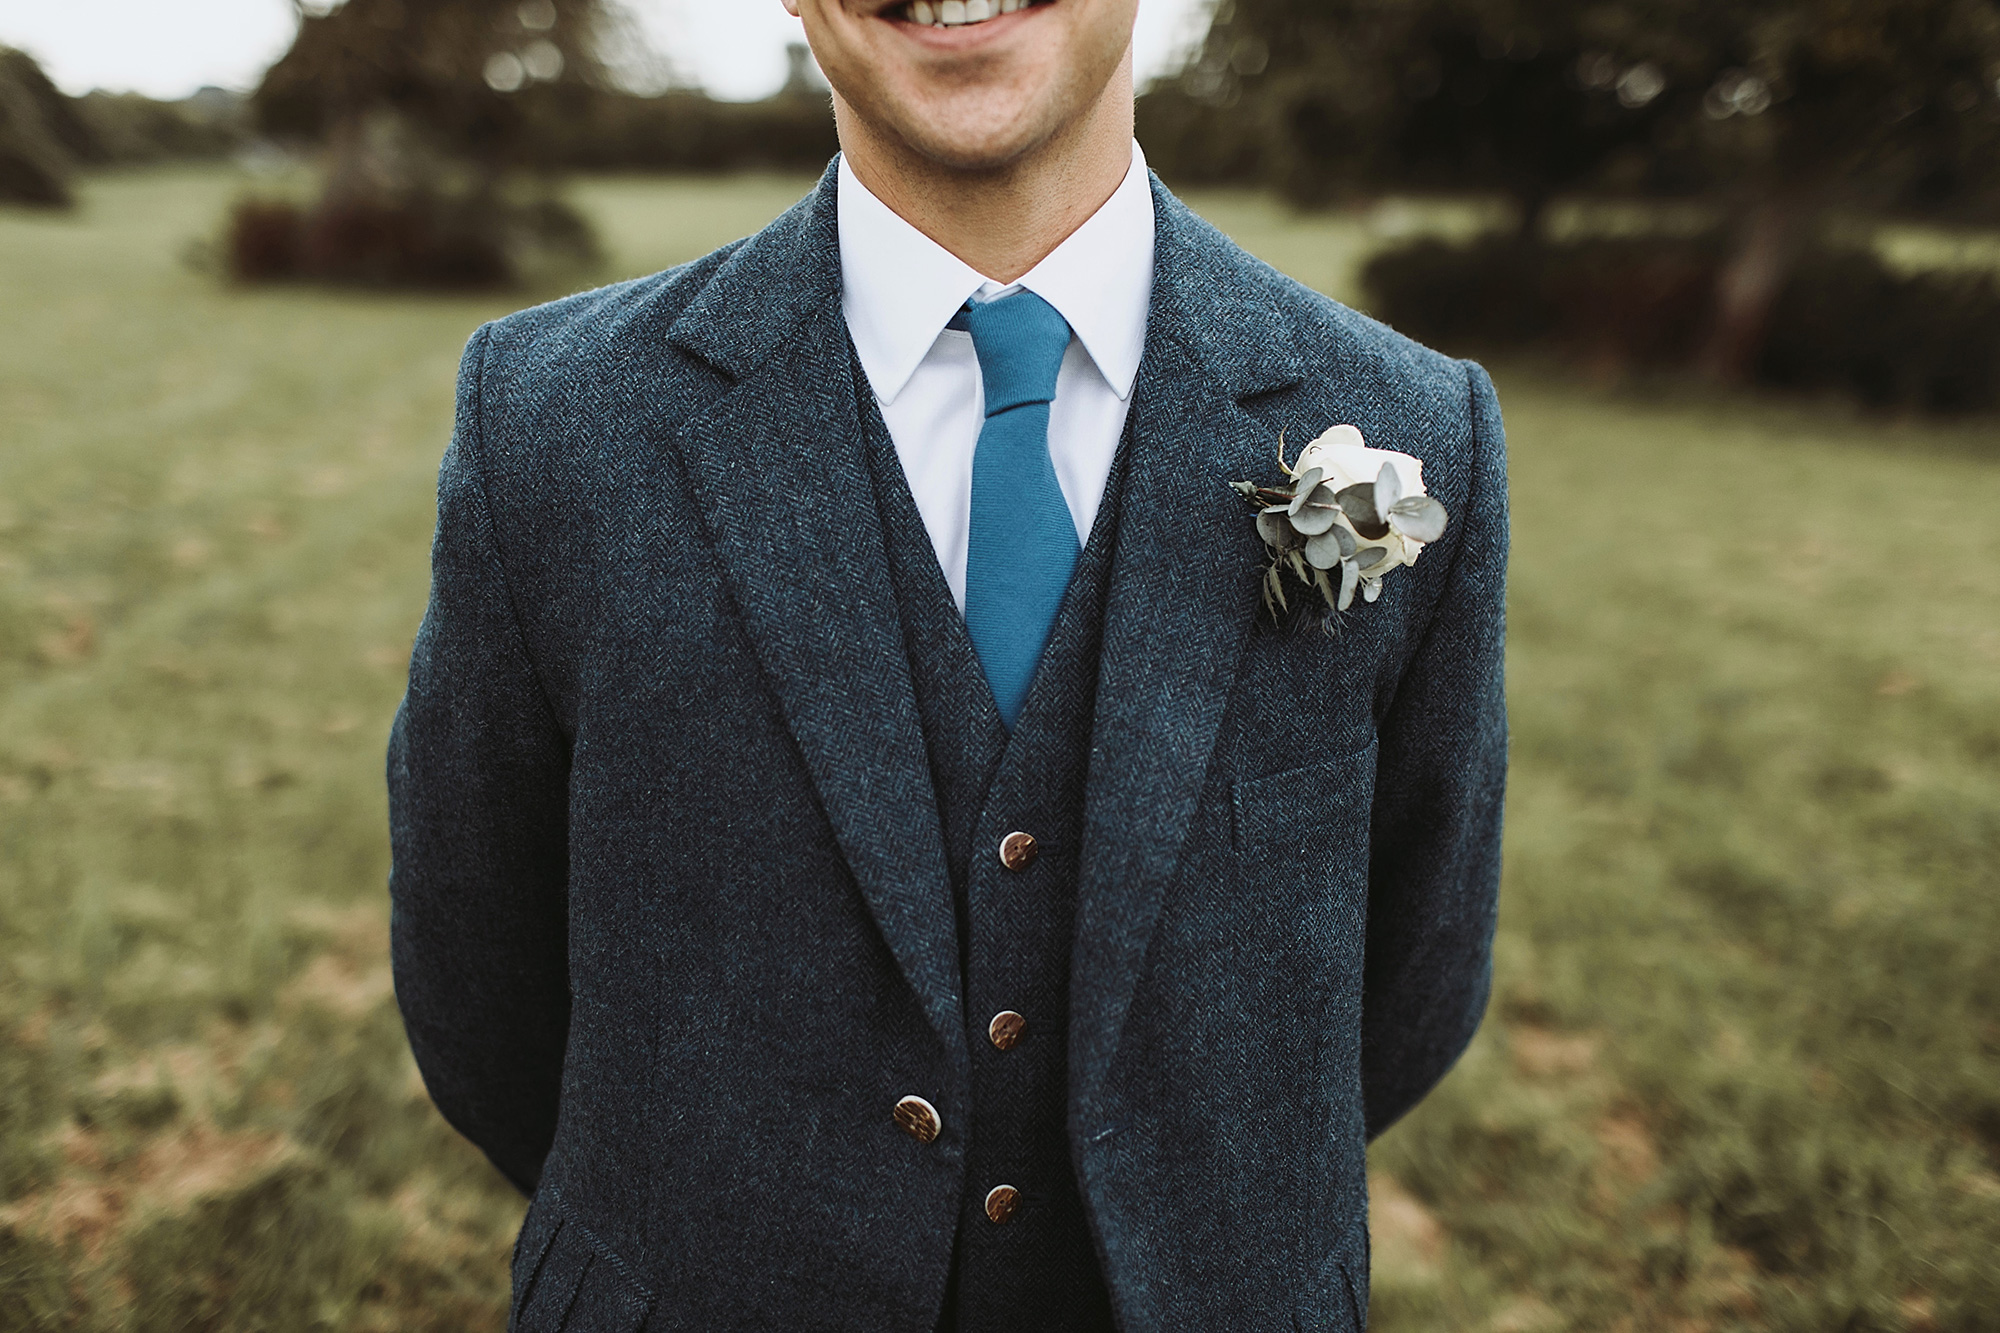 Fern_Nick_Simple-Classic-Wedding_Luke-Hayden-Photography_033